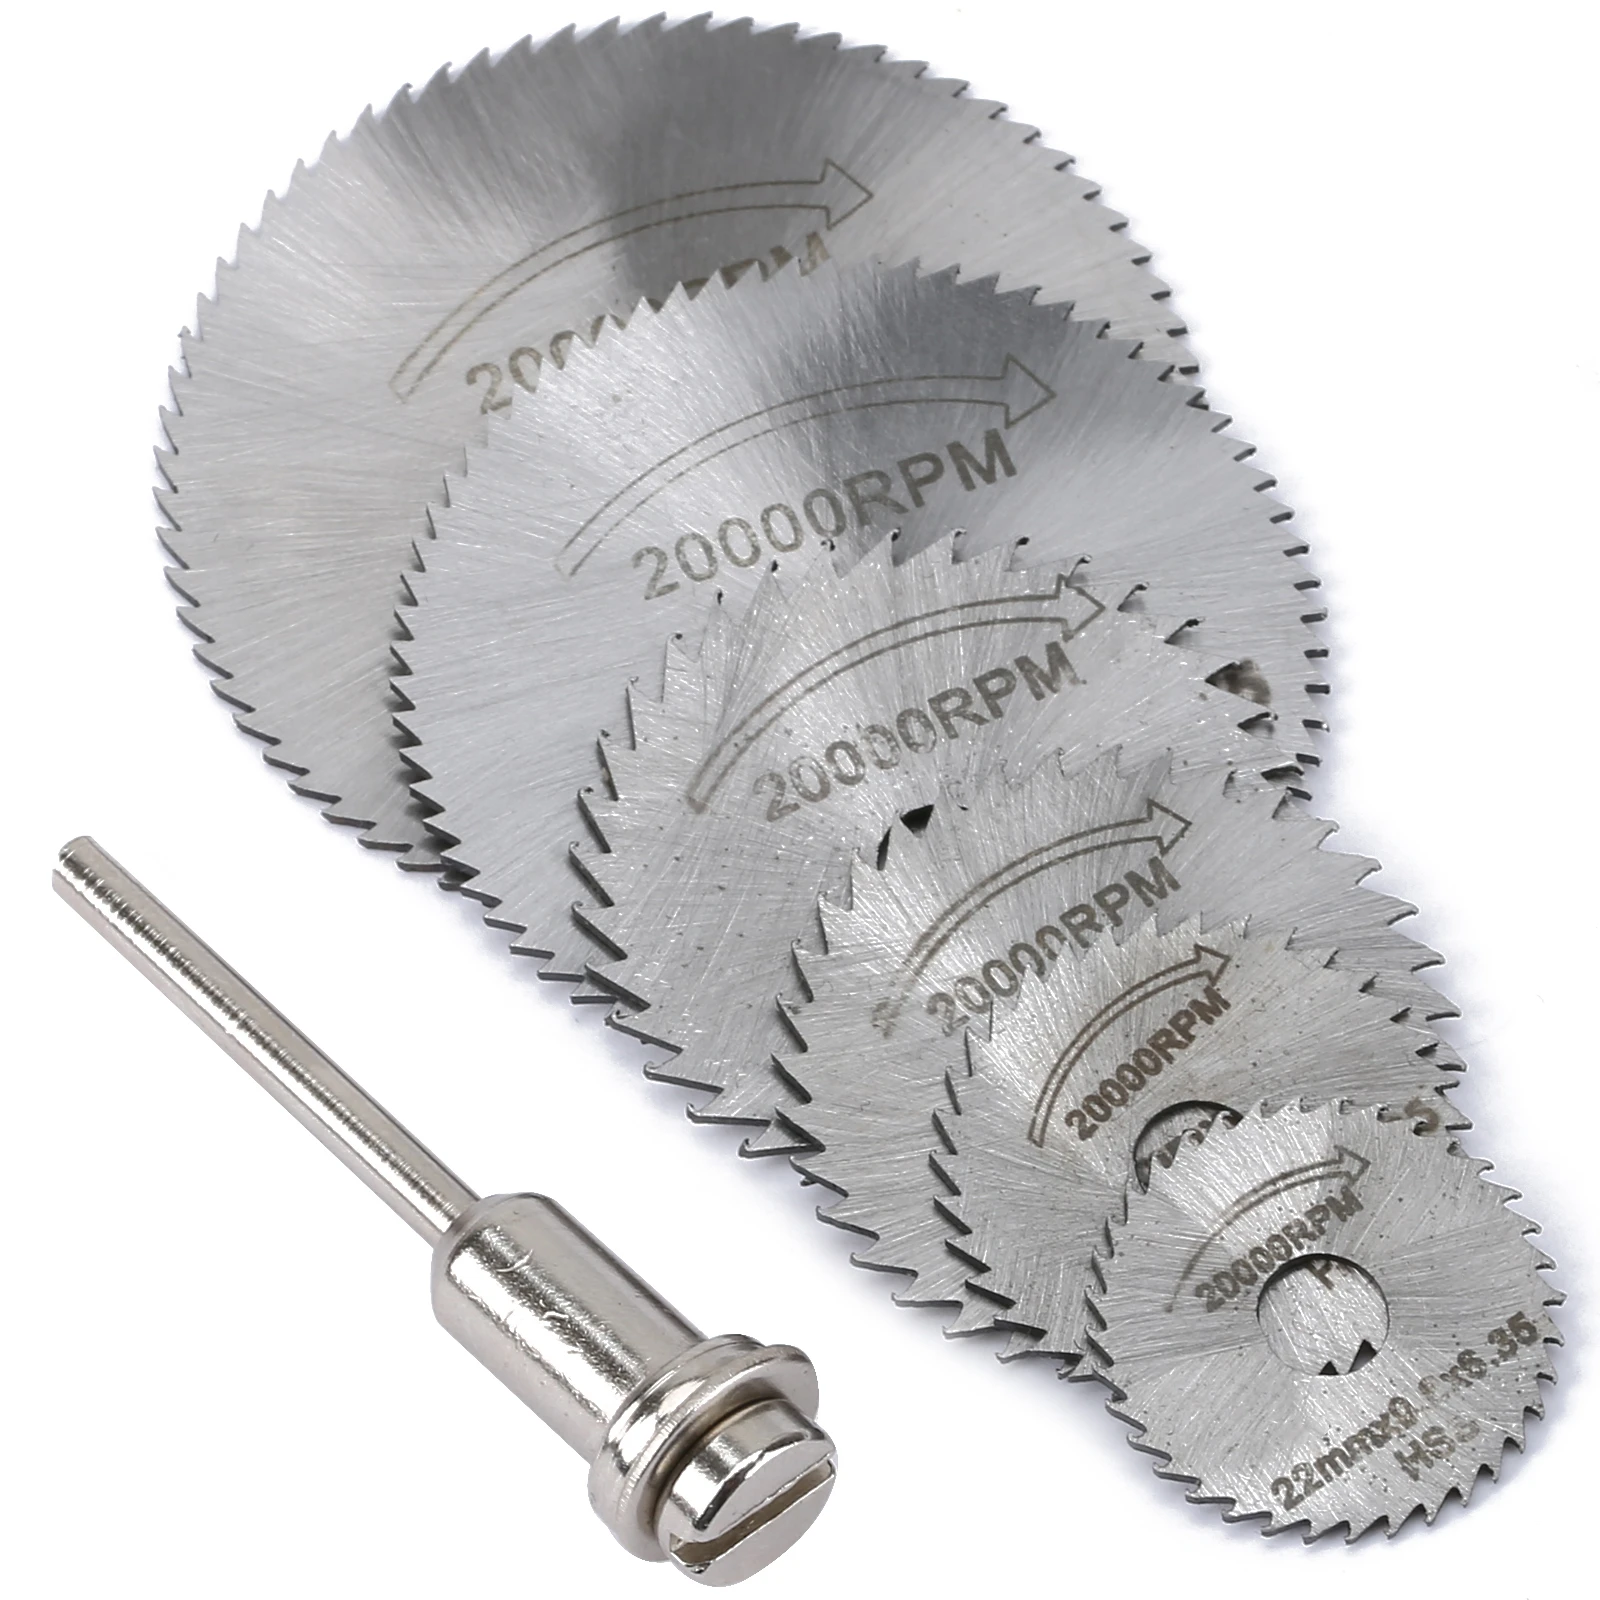 Drill Bit Cutting Wheel Discs Mini Rotary Tool Circular Saw Screwdriver Metal 6T 